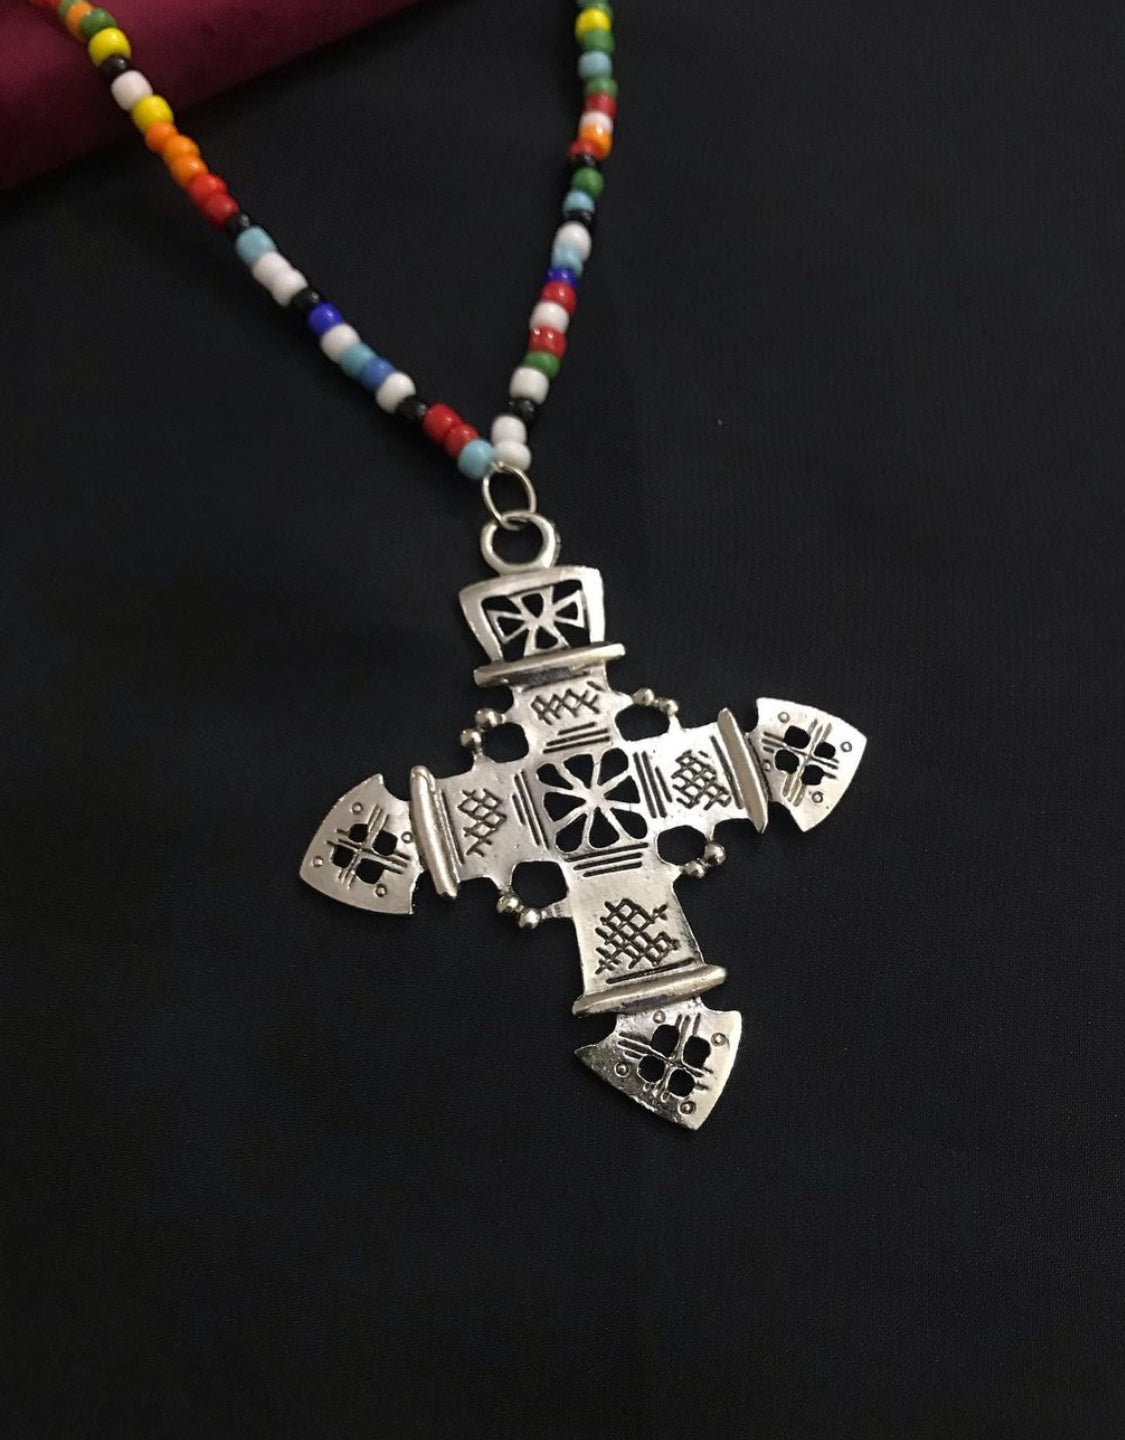 Handmade choker necklace - Shopeology